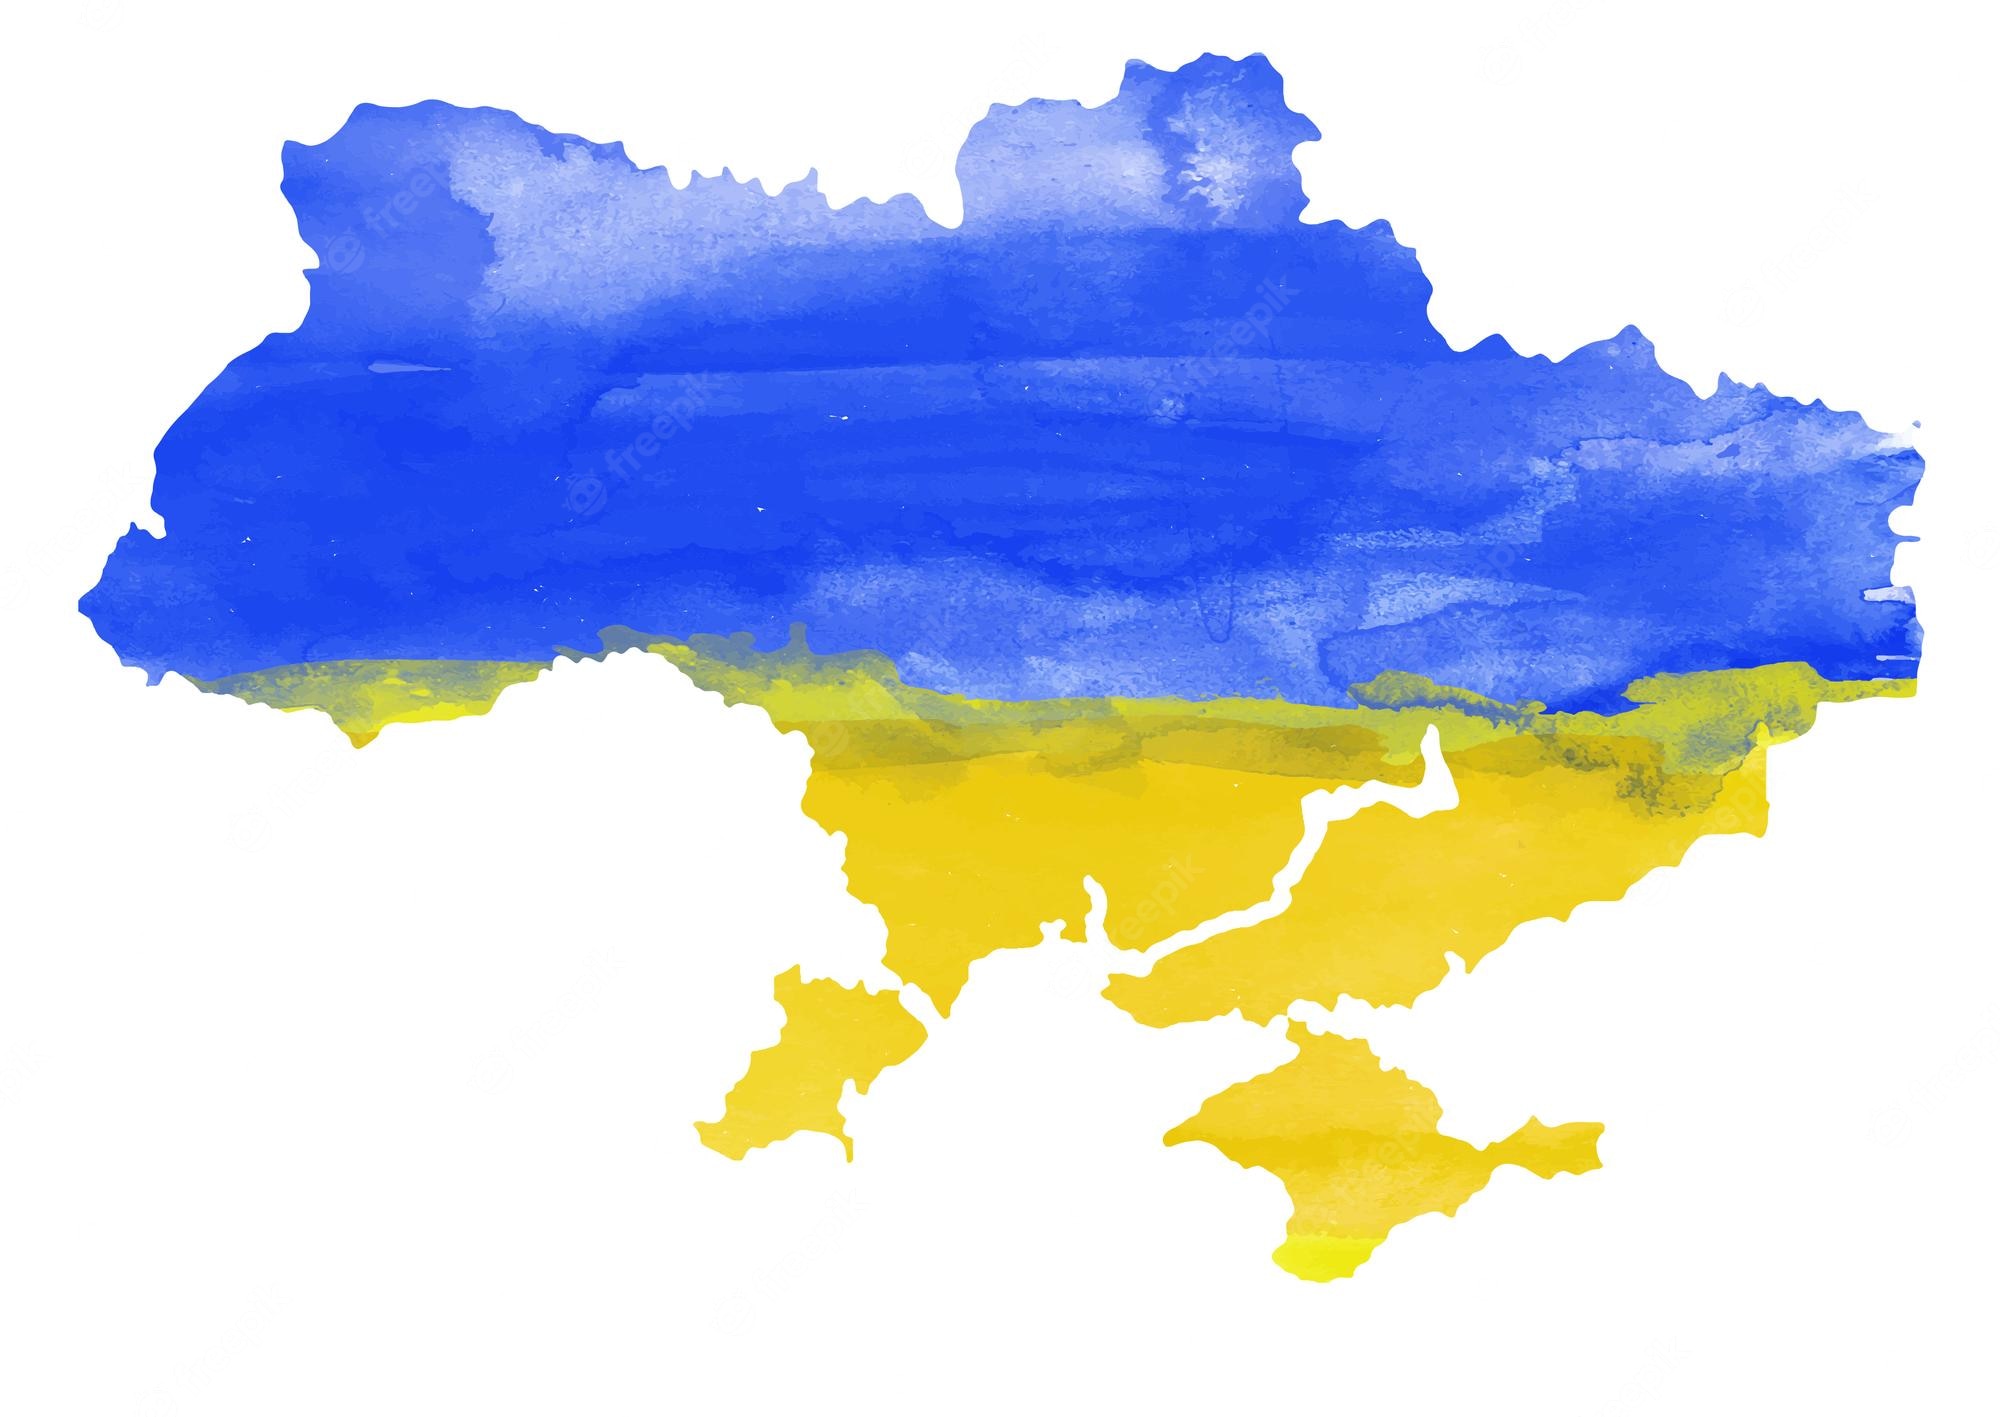 Ukraine map Image. Free Vectors, & PSD